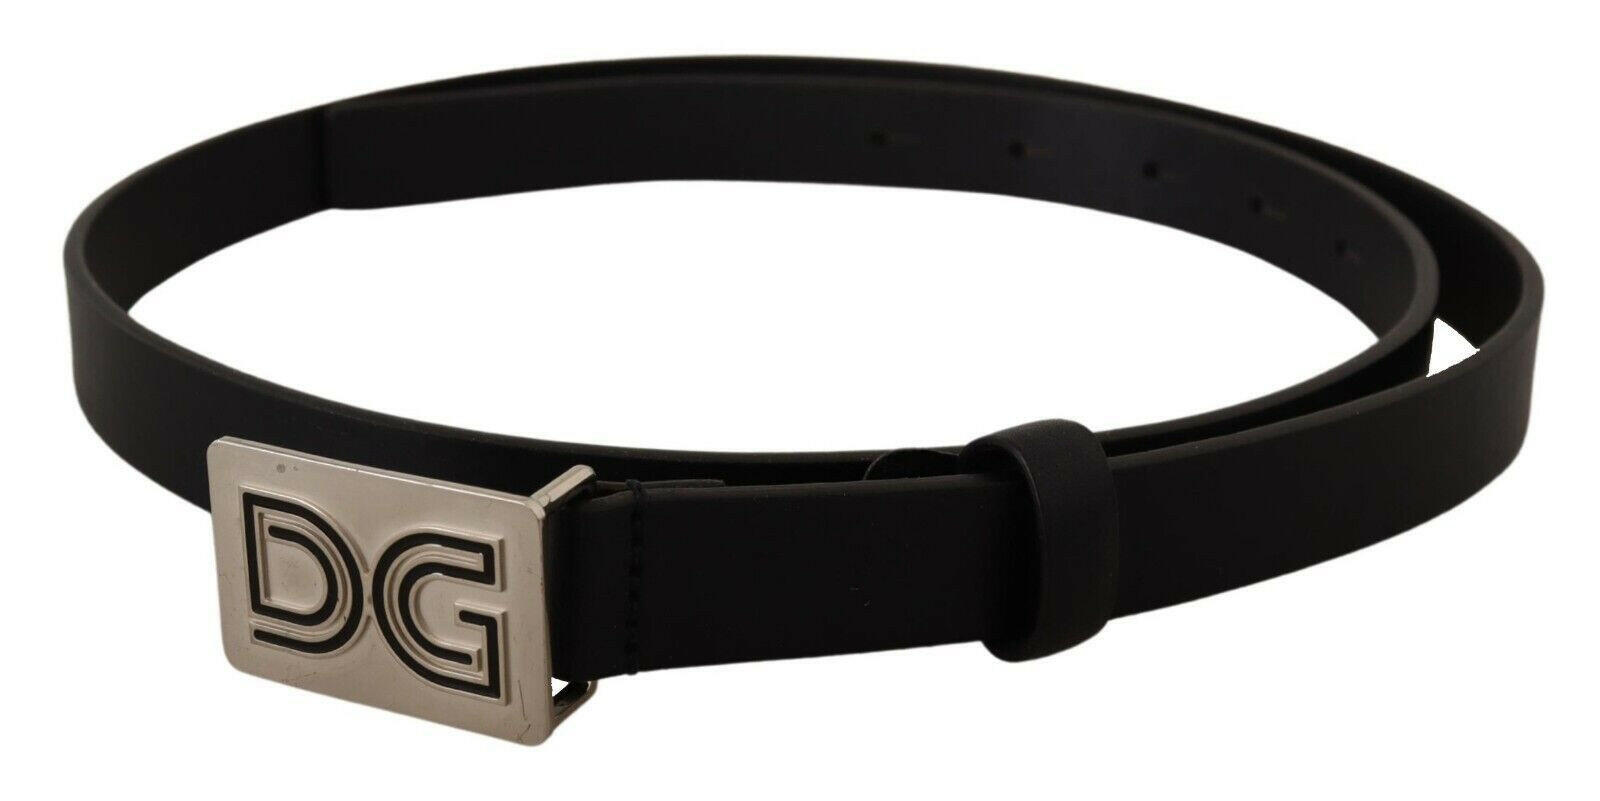 Dolce & Gabbana Black Leather Silver DG Logo Buckle Belt - GENUINE AUTHENTIC BRAND LLC  